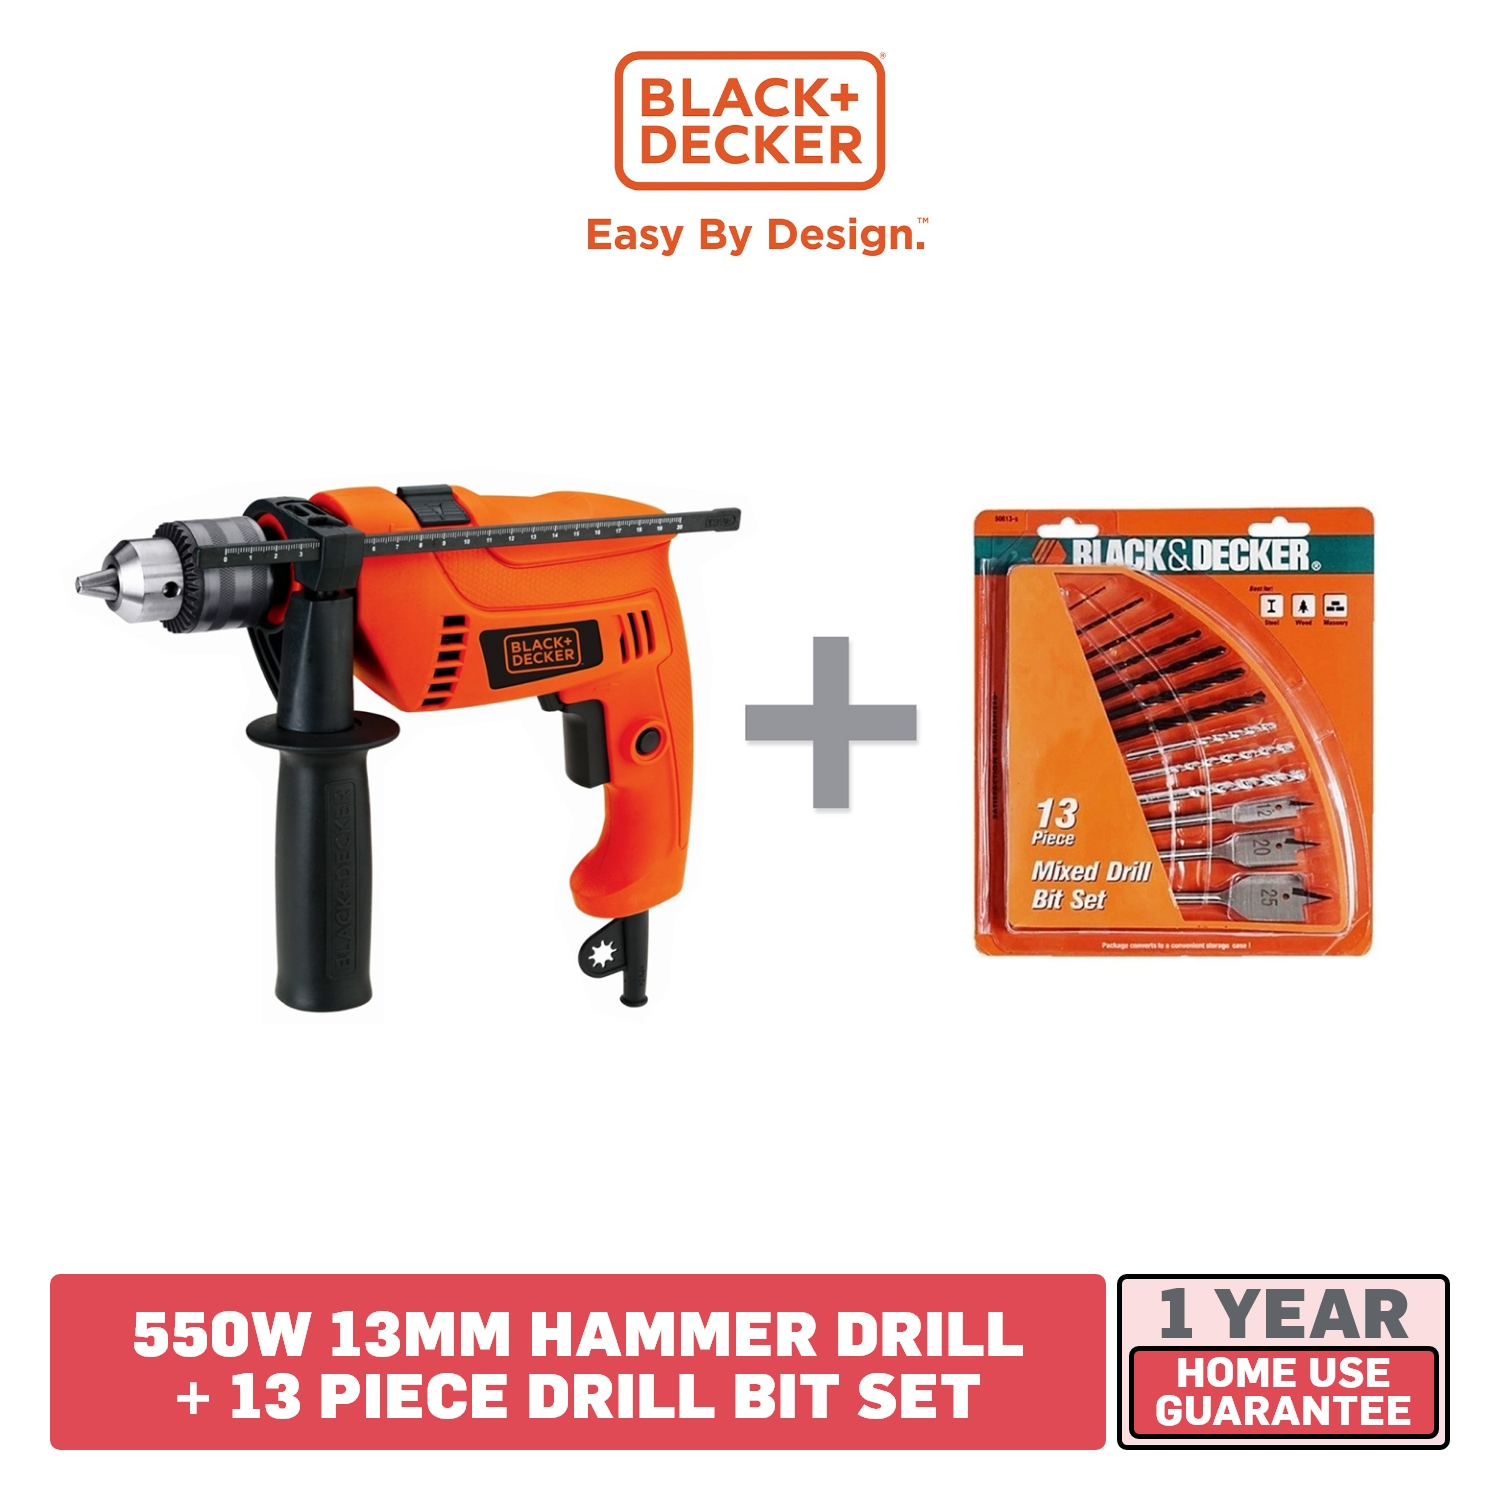 Black & Decker 10MM Impact Drill TP555K – AHPI